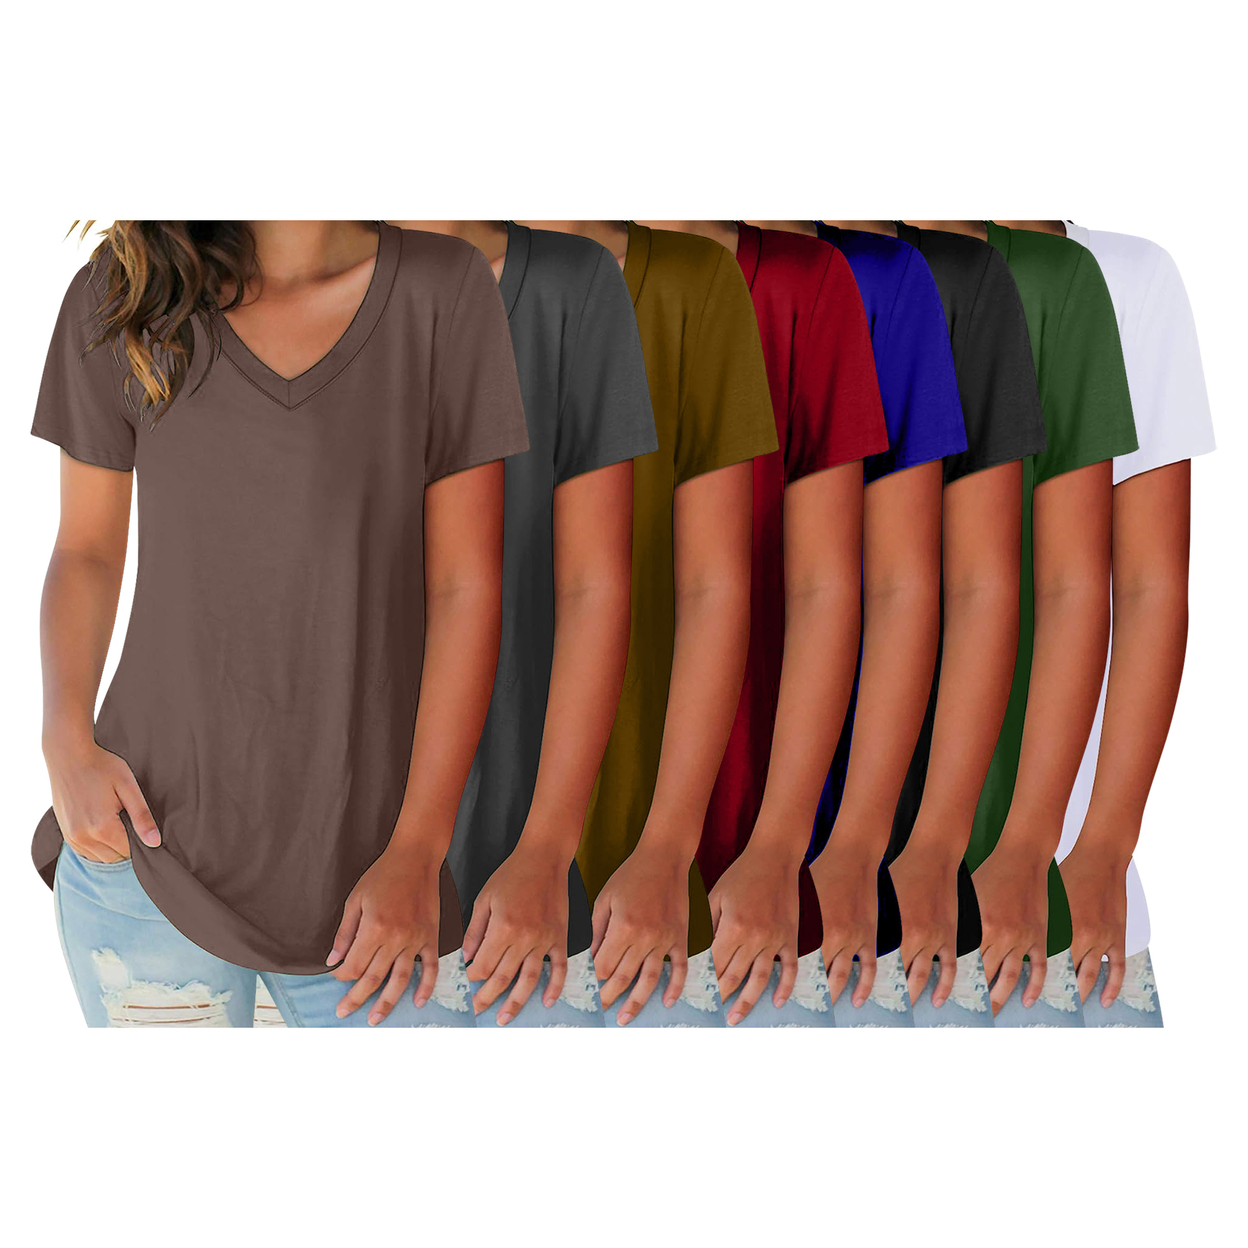 2-Pack: Women's Ultra Soft Smooth Cotton Blend Basic V-Neck Short Sleeve Shirts - Black & Red, Xx-large